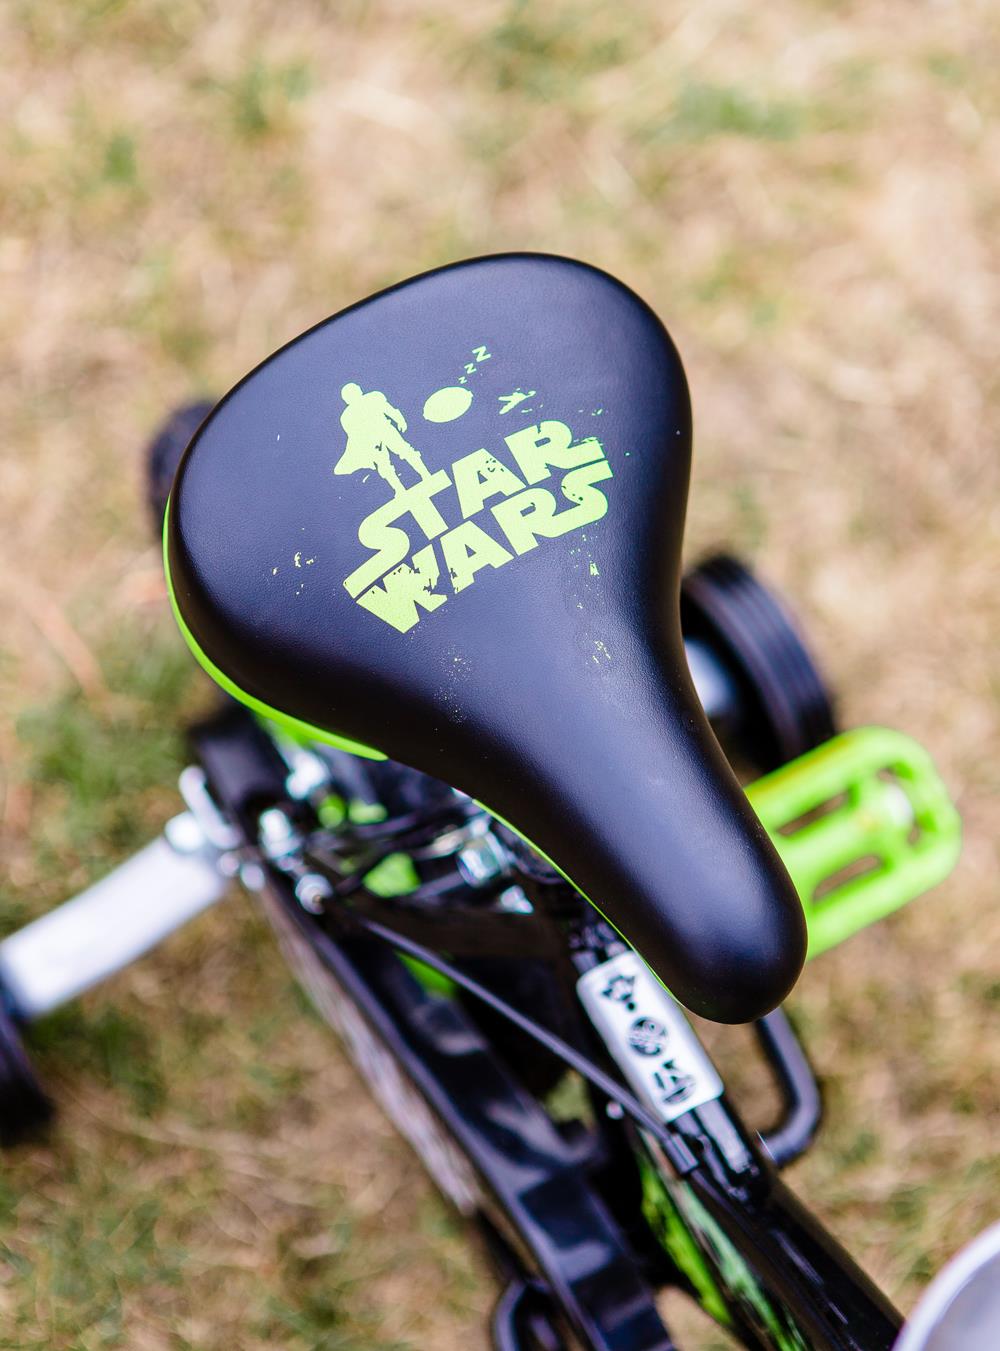 Huffy Star Wars 12" Kids Bicycle